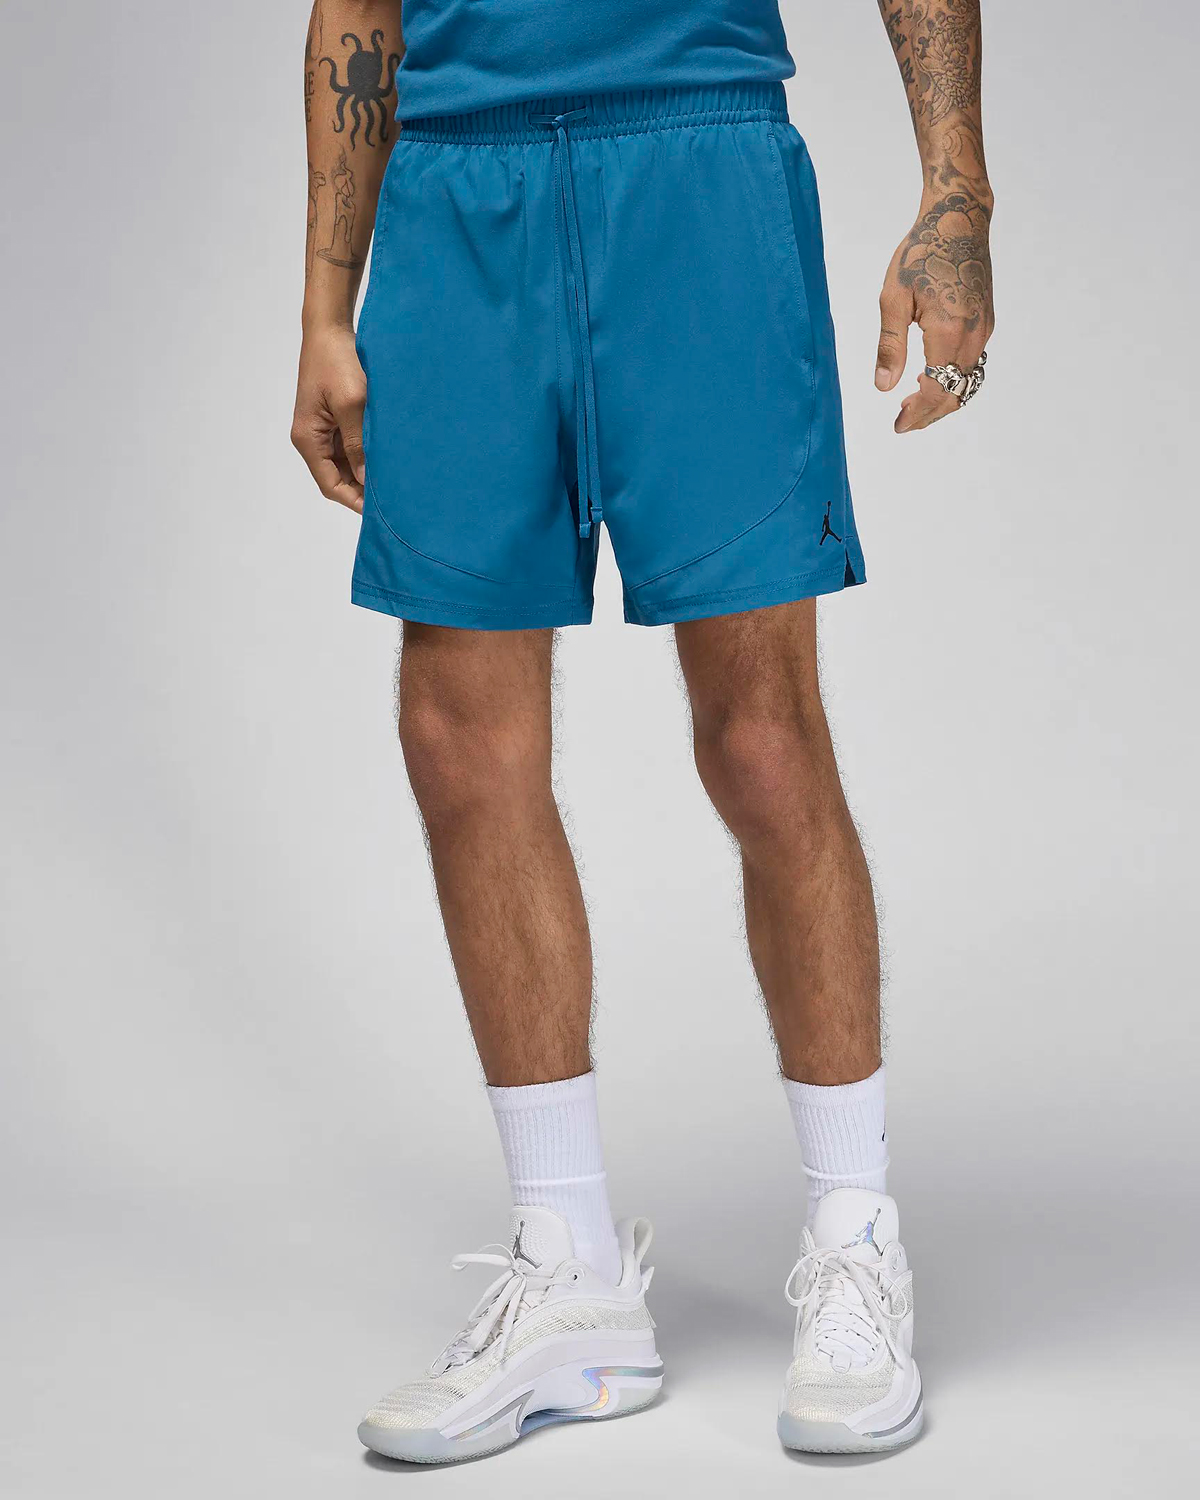 Jordan-Sport-Woven-Shorts-Industrial-Blue